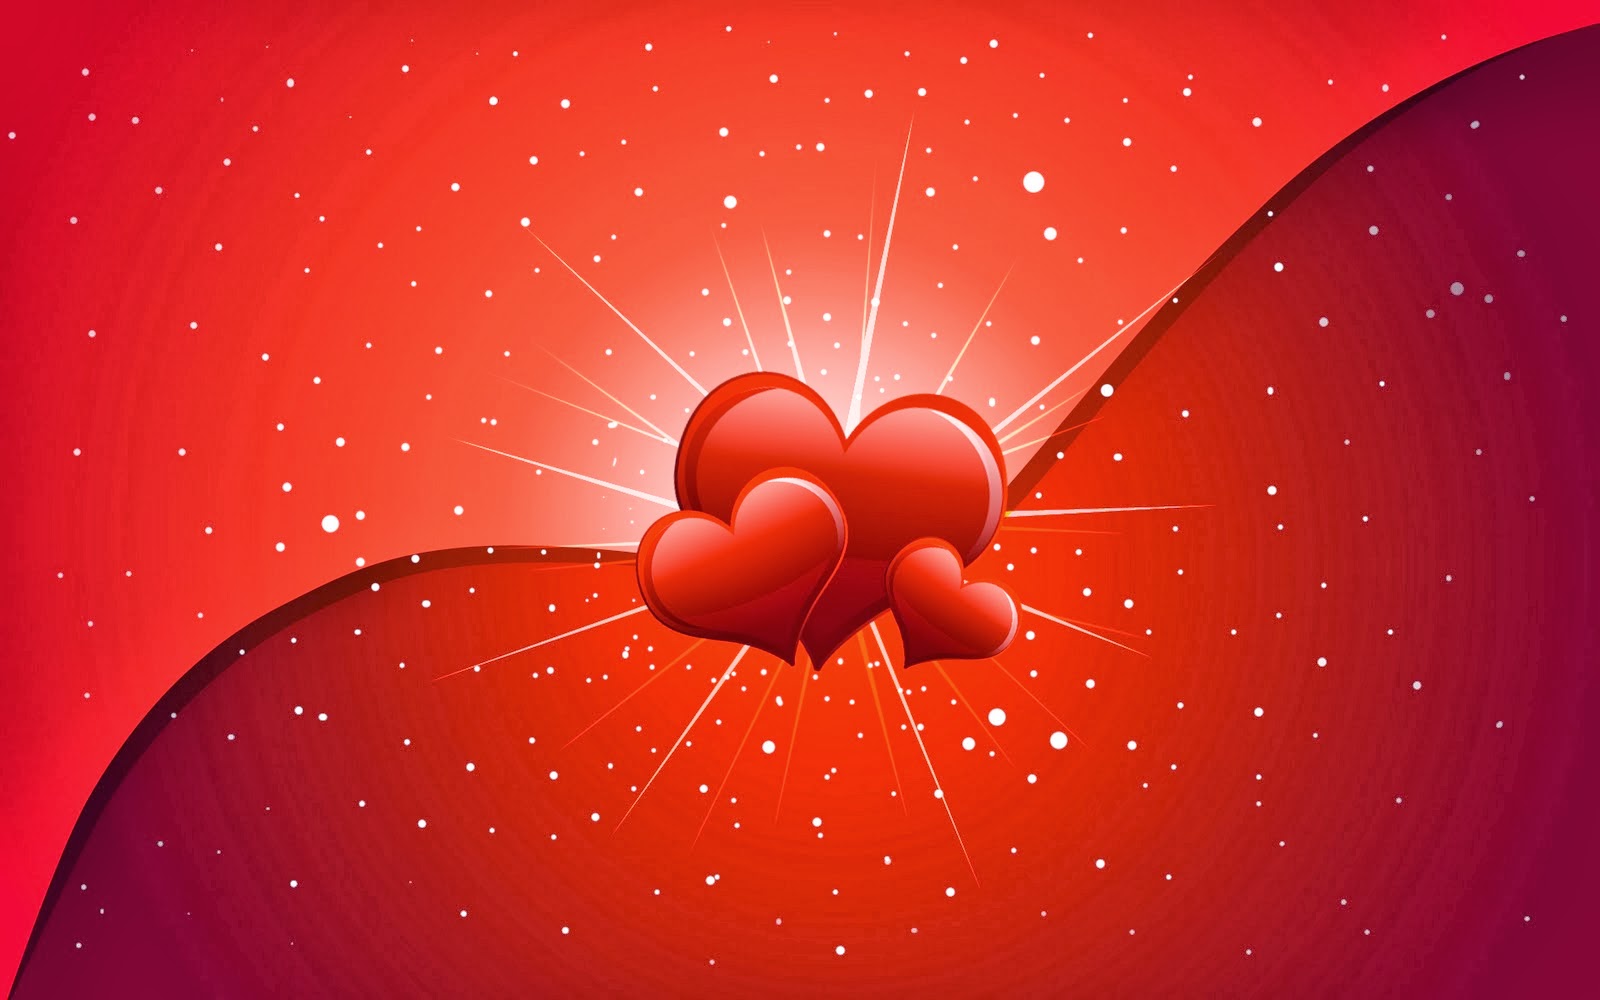 unique wallpaper download,red,heart,valentine's day,graphics,illustration